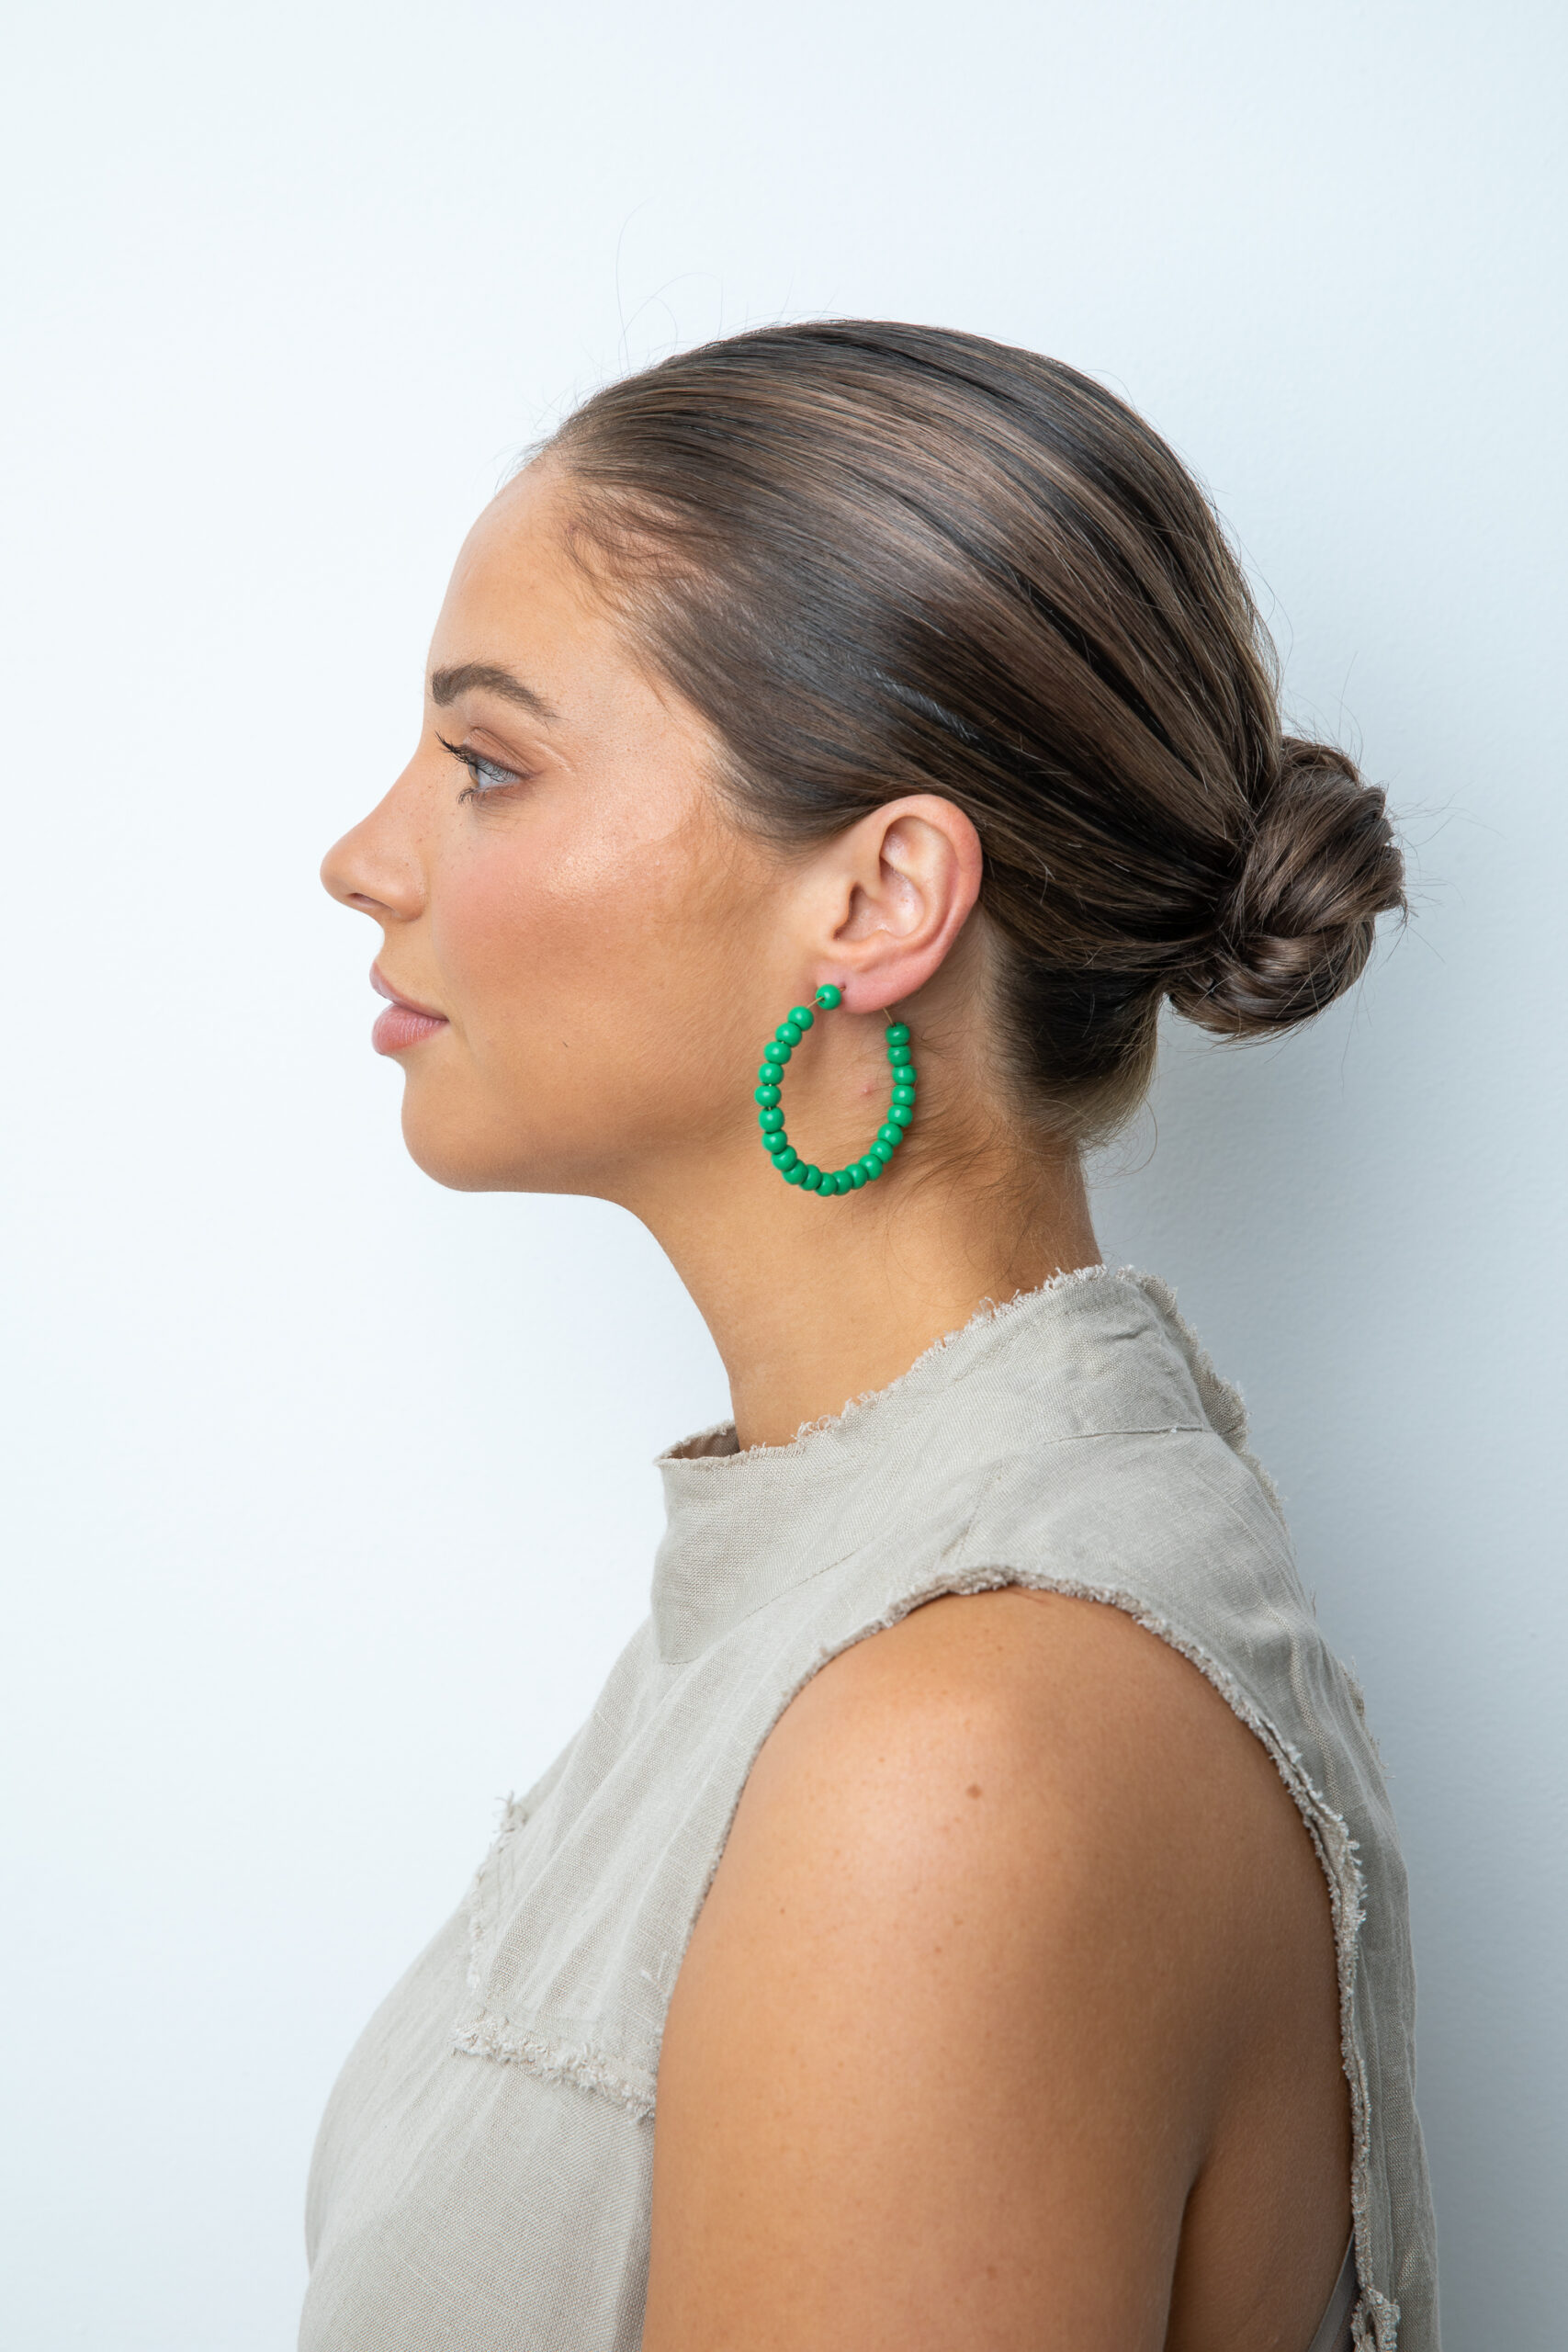 Girl wearing hoop earrings with green wooden beads